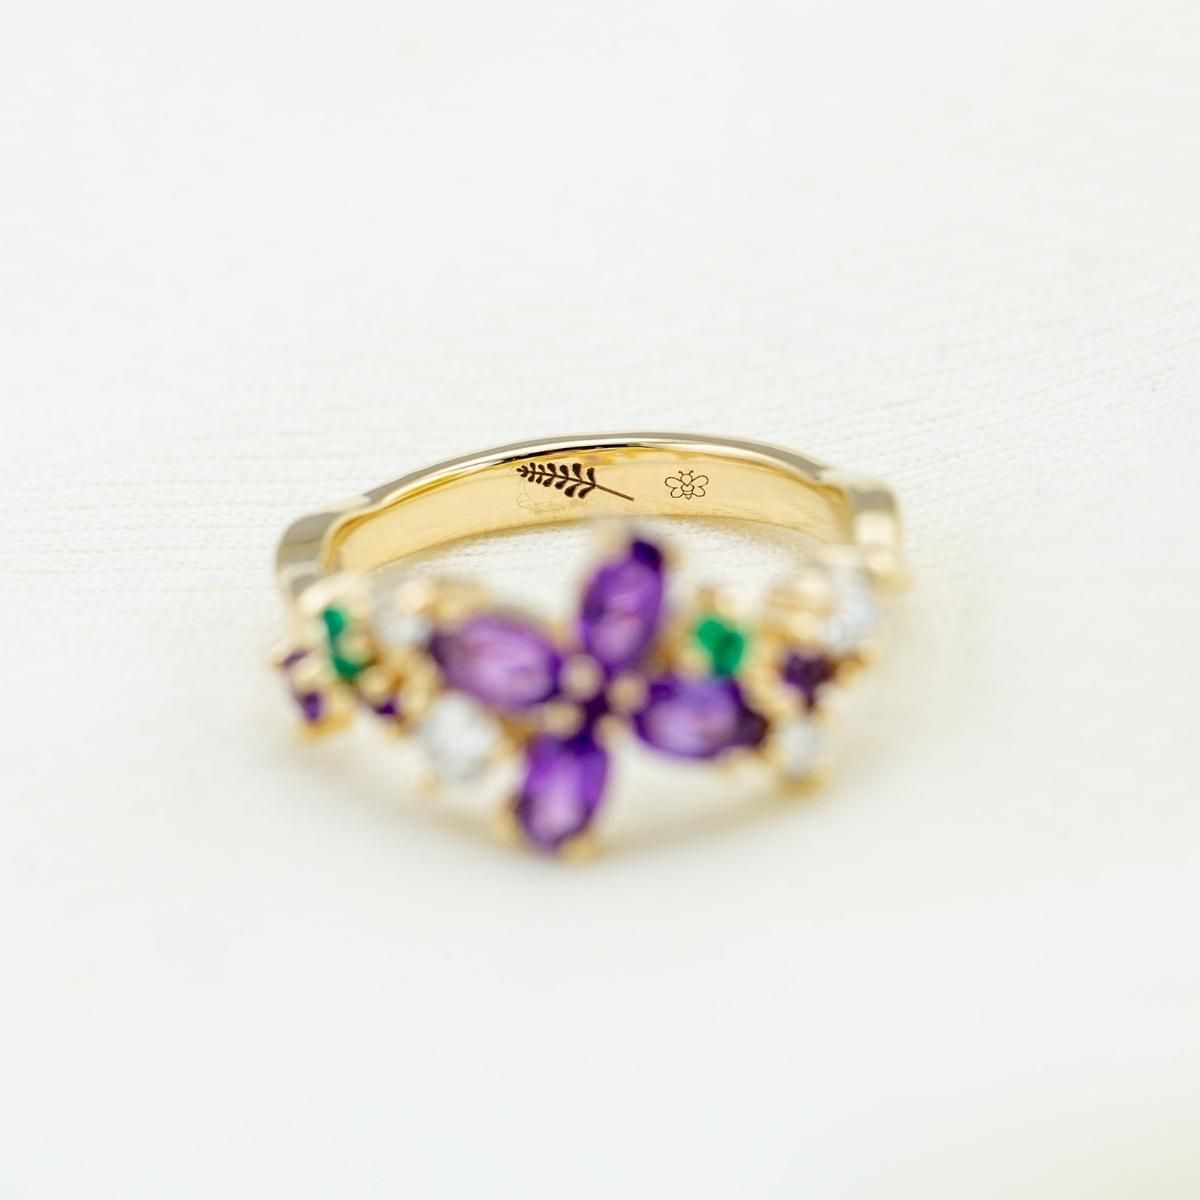 Lavender flower engagement ring designs | CustomMade.com